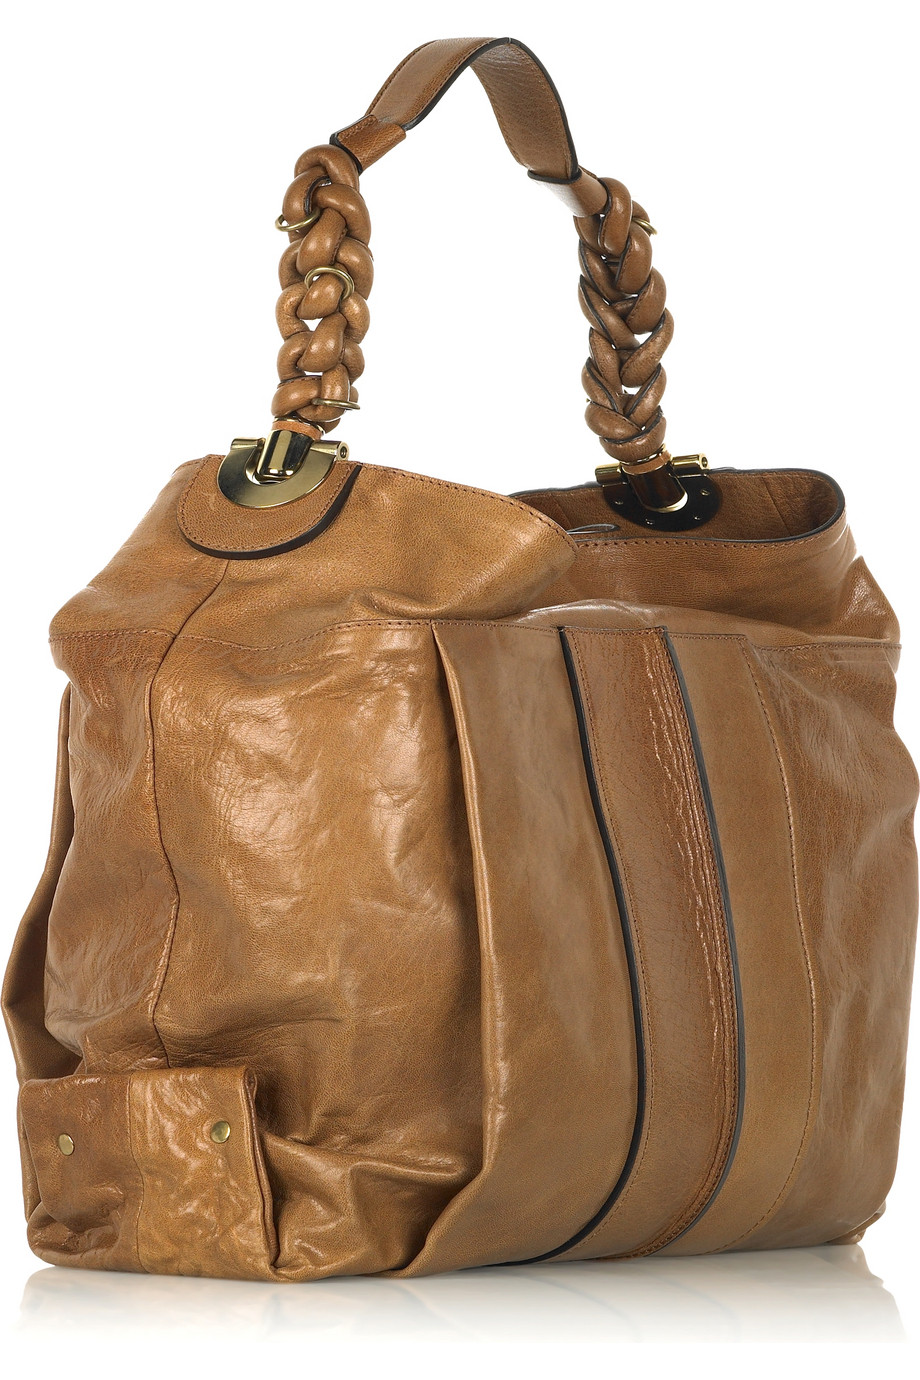 Chloé Heloise Leather Hobo Bag in Camel (Natural) - Lyst